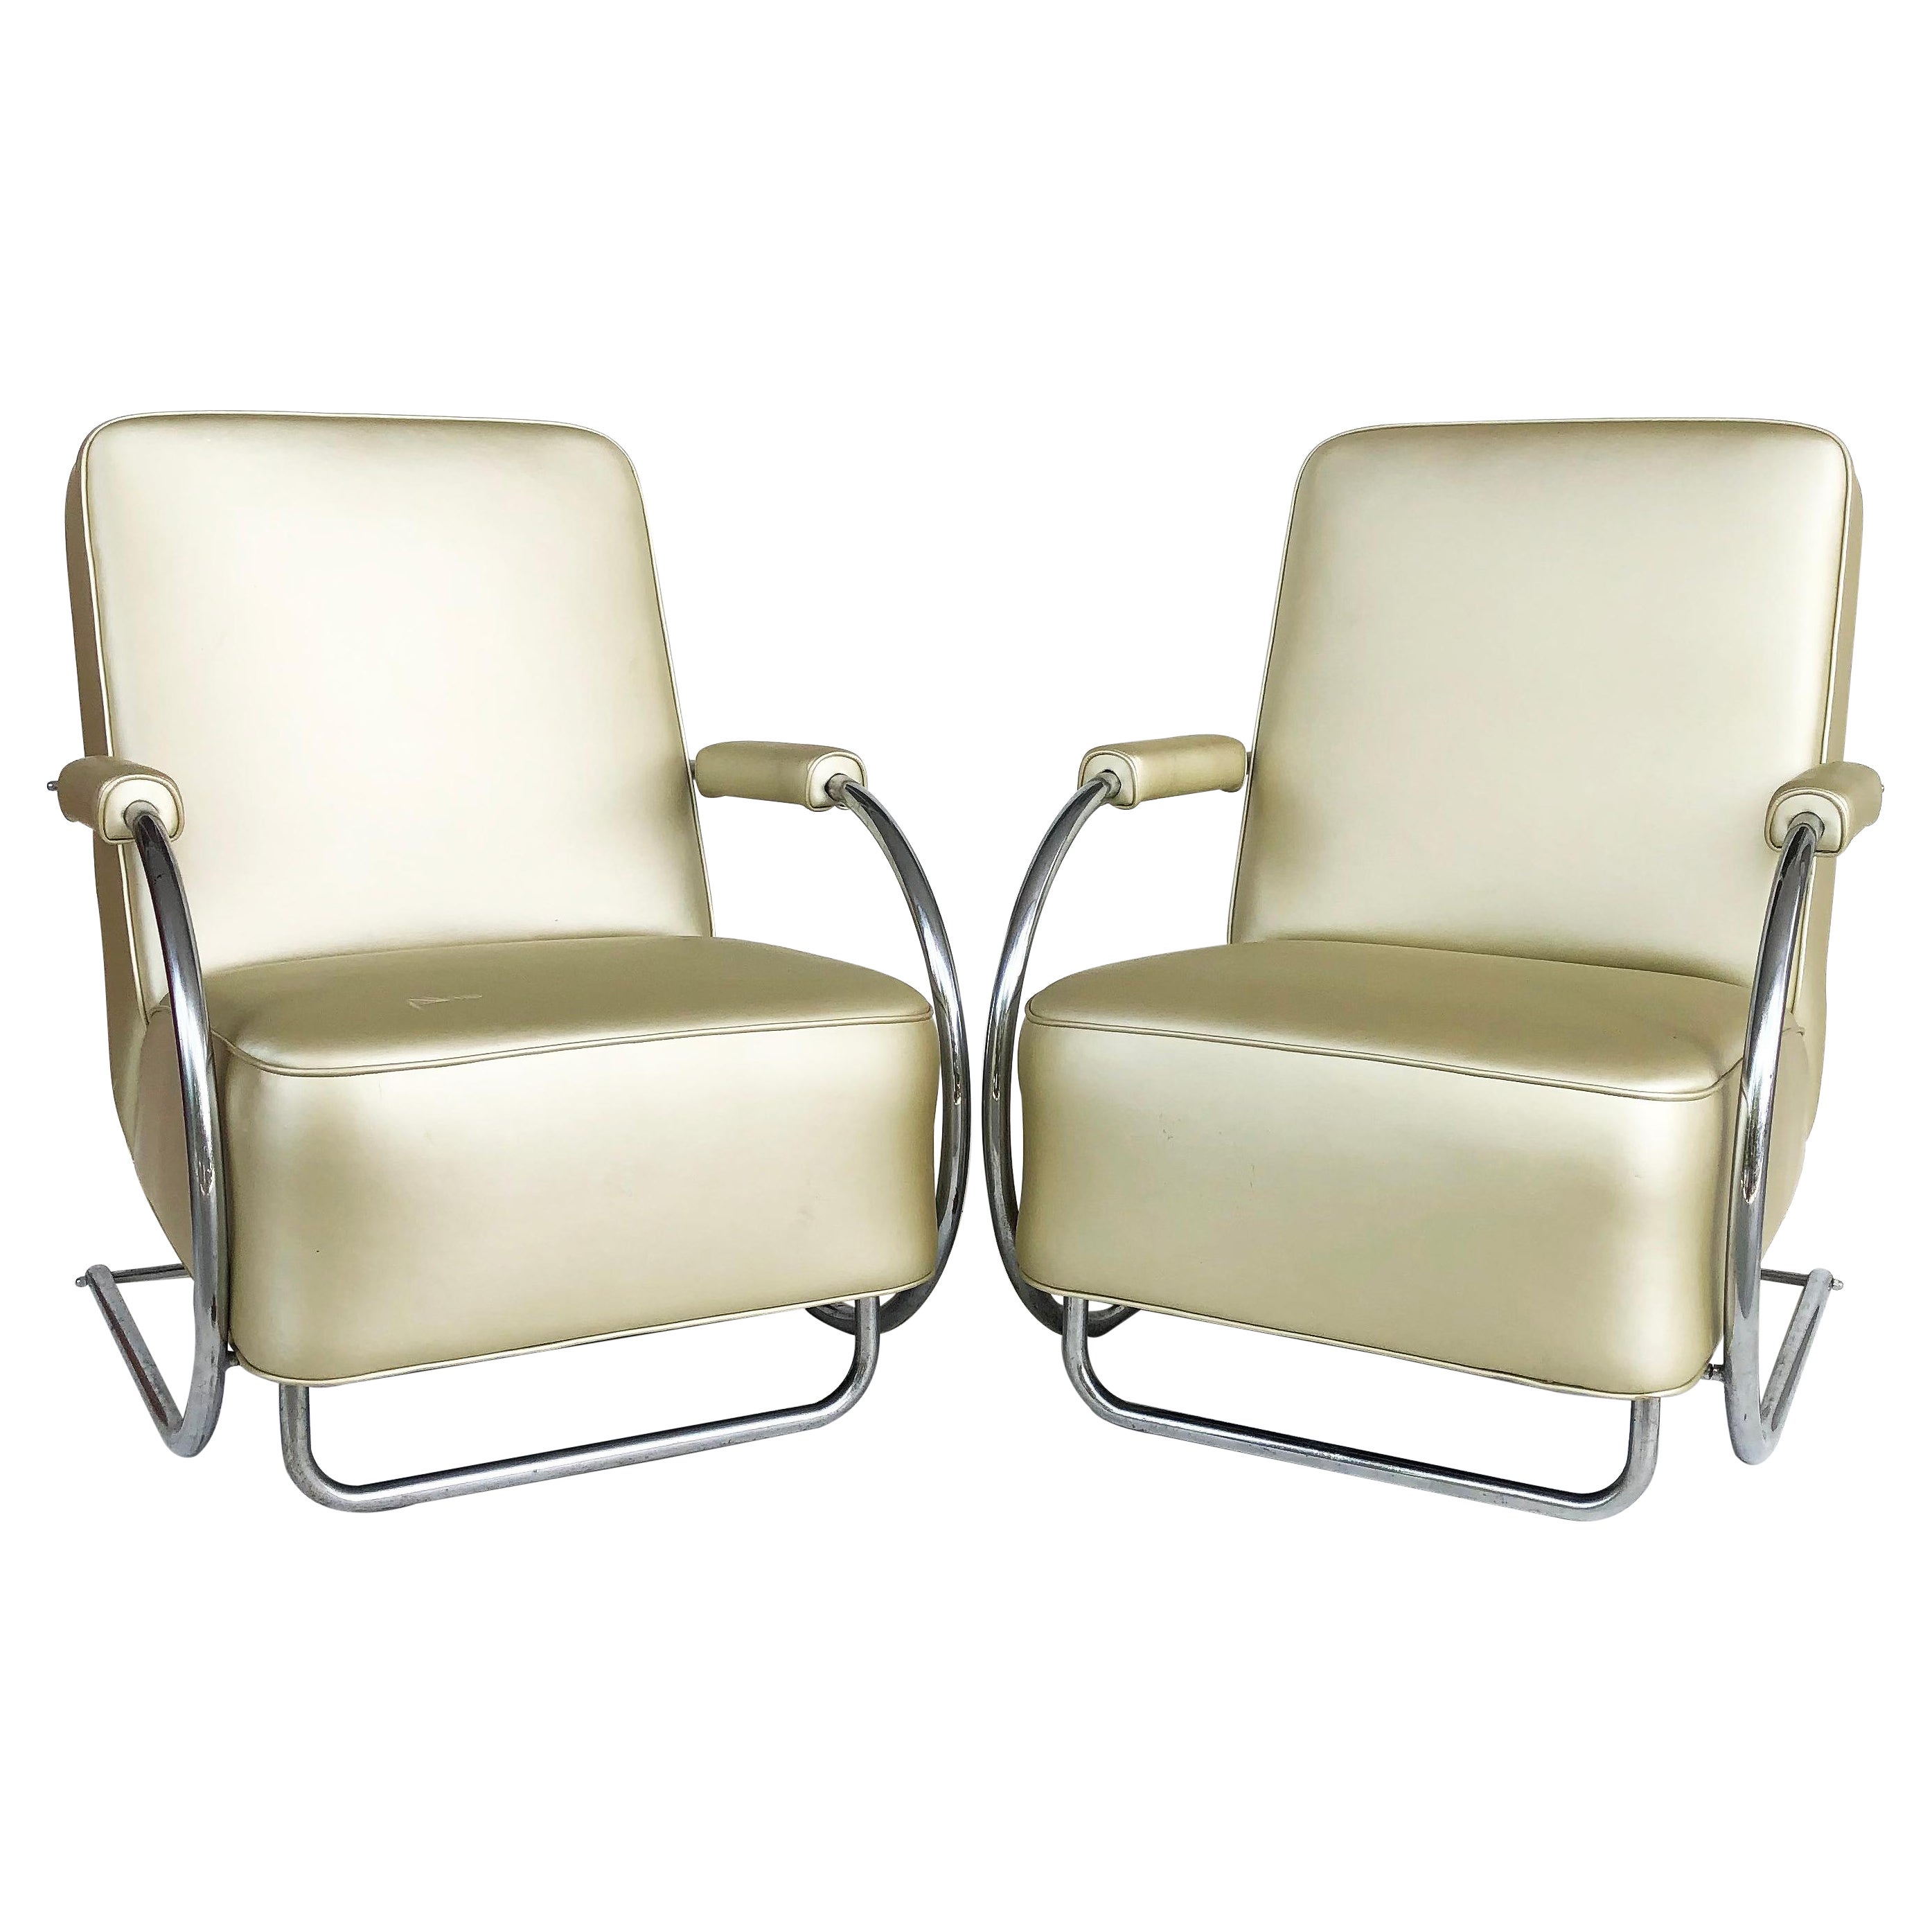 Art Deco Streamline Moderne Chairs by Kem Weber, Attributed 